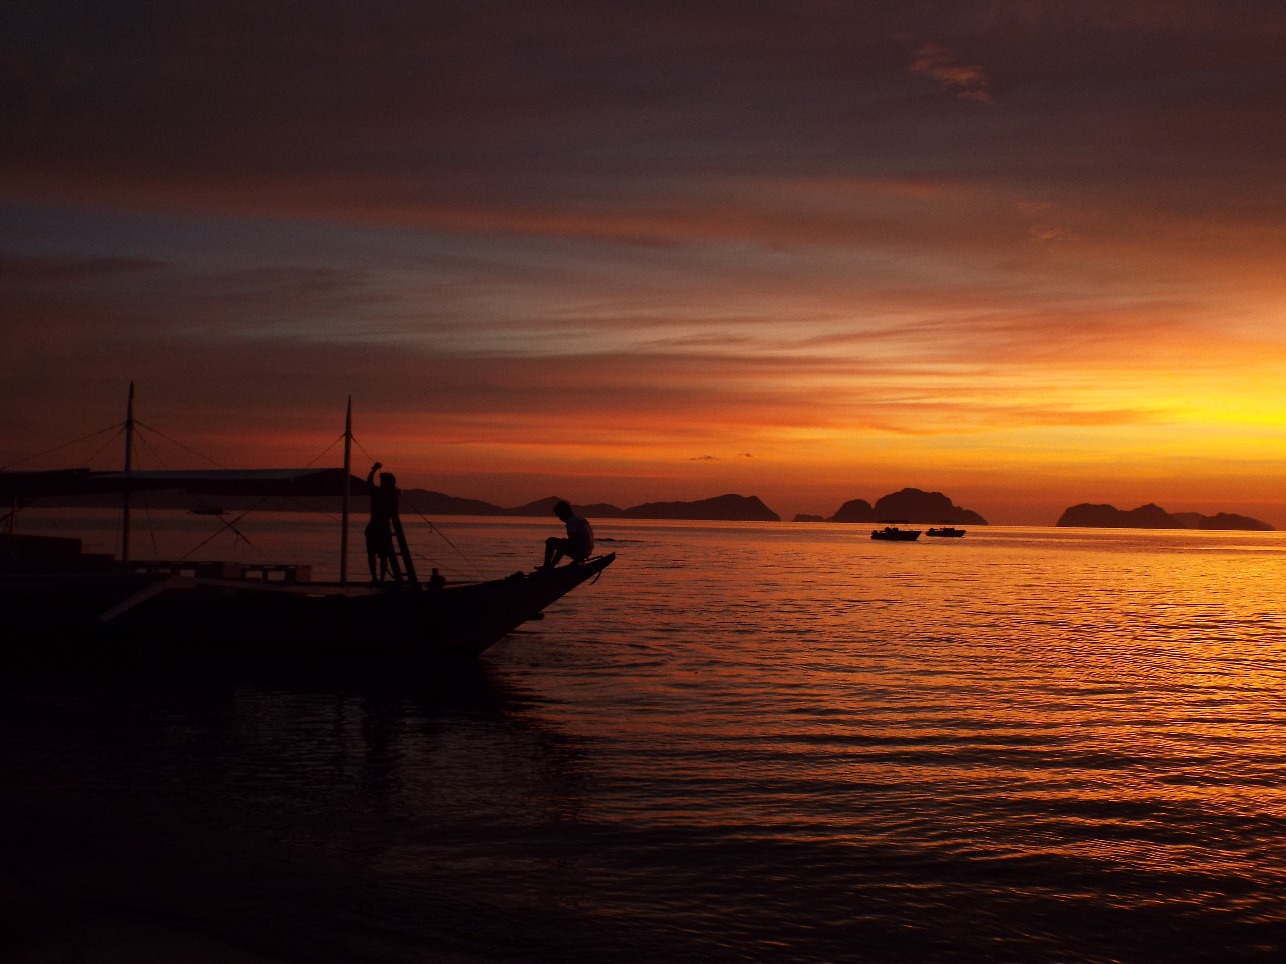 Fishermen, People | Fishing | Men | Boat | Sunset | Water | Sea | Ocean | Red | Yellow | Asia | Travel